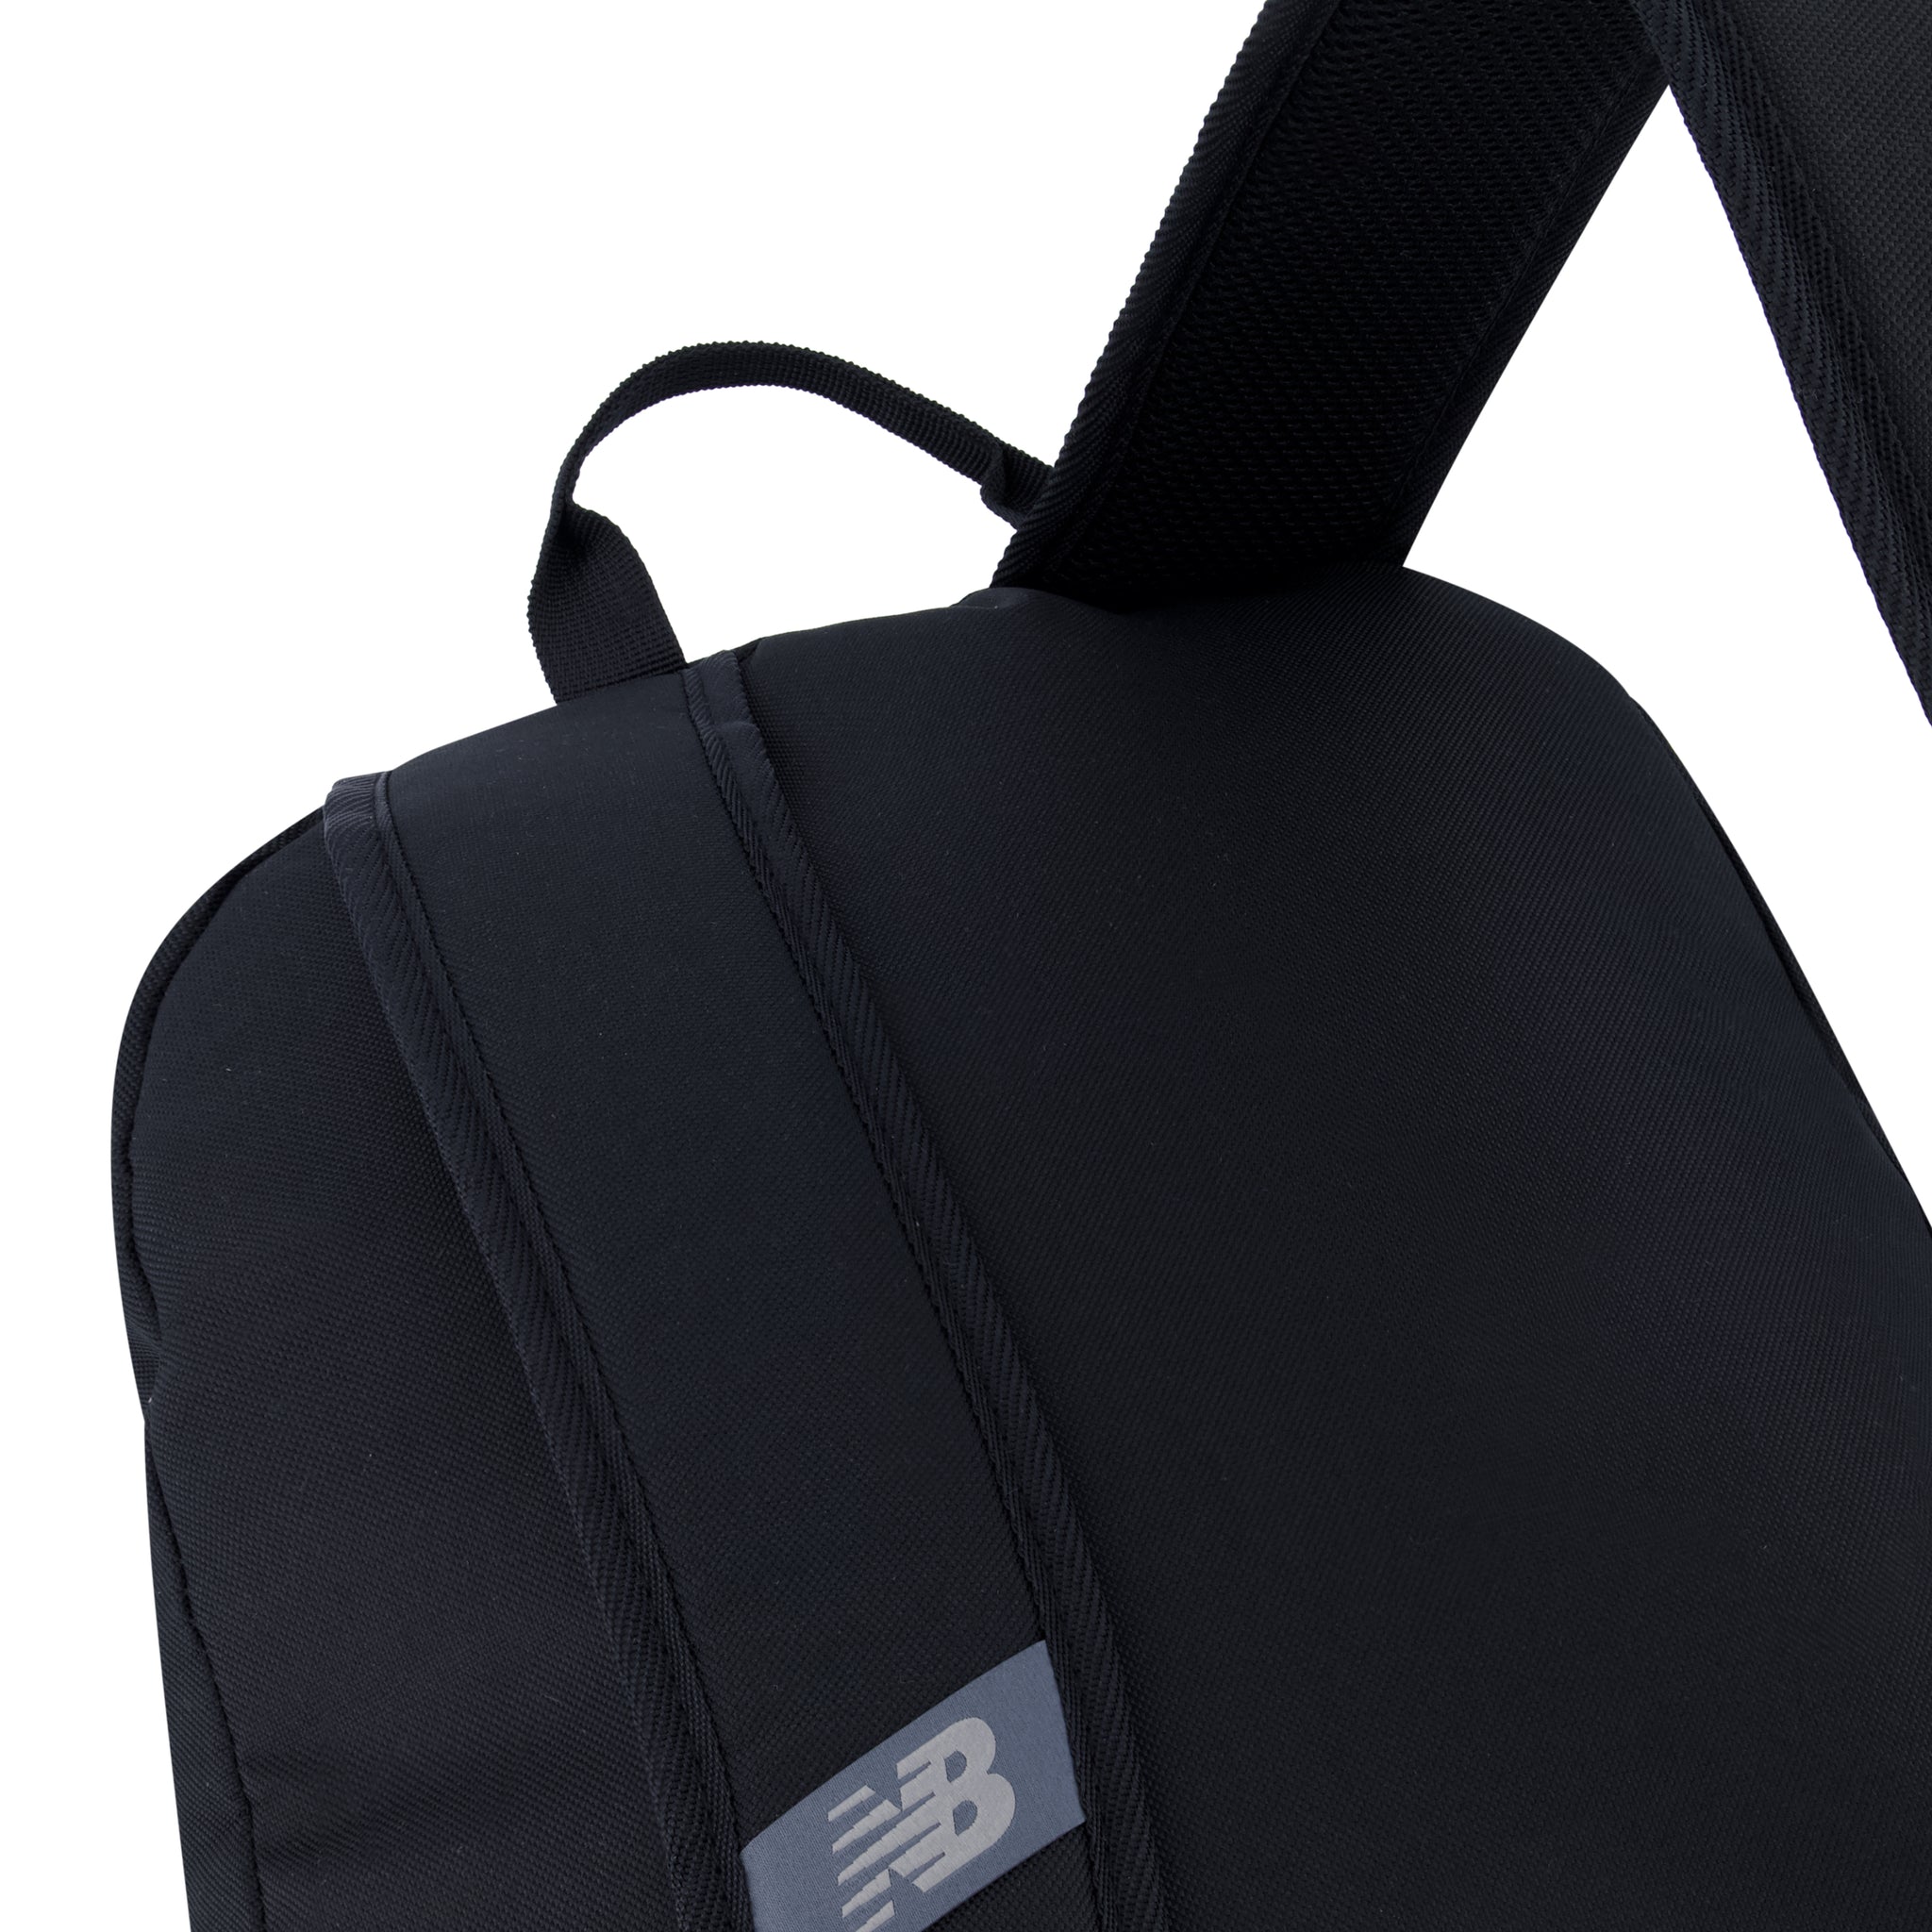 New Balance 19" Laptop Backpack